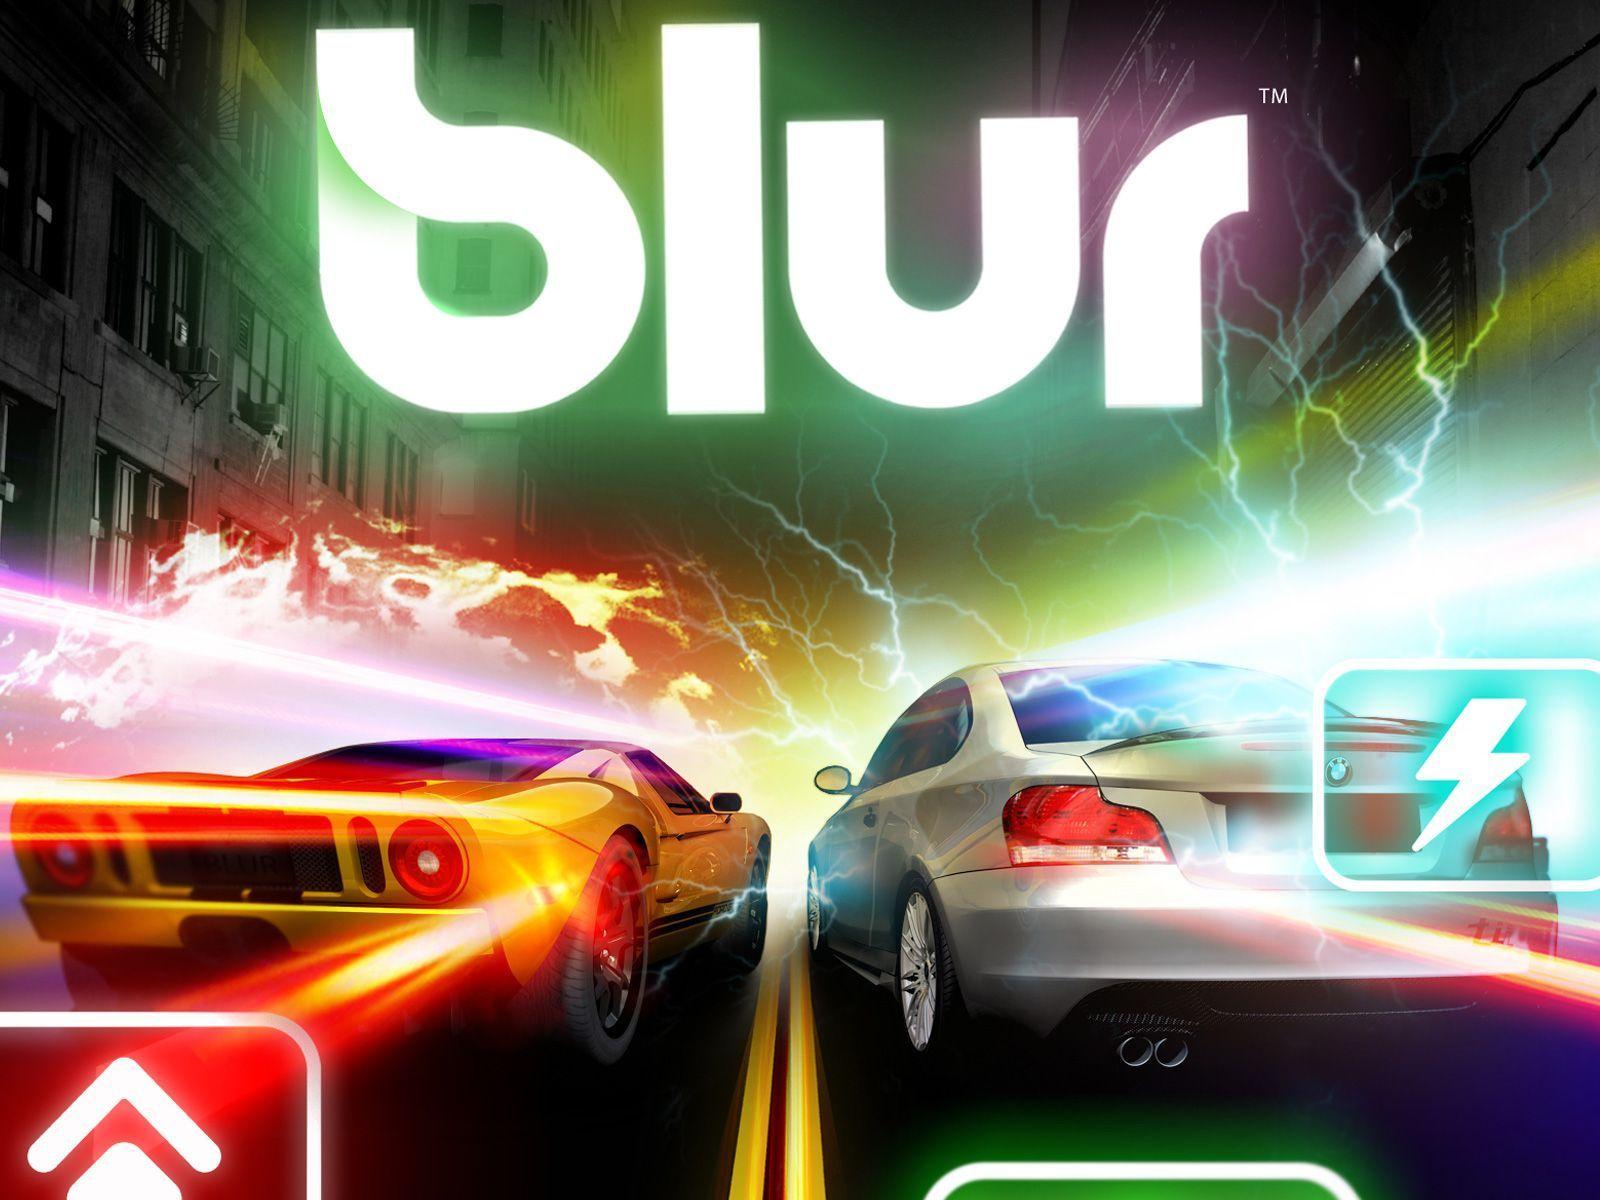 Blur Game Xbox PS3 PC Wallpaper 1600x1200 px Free Download